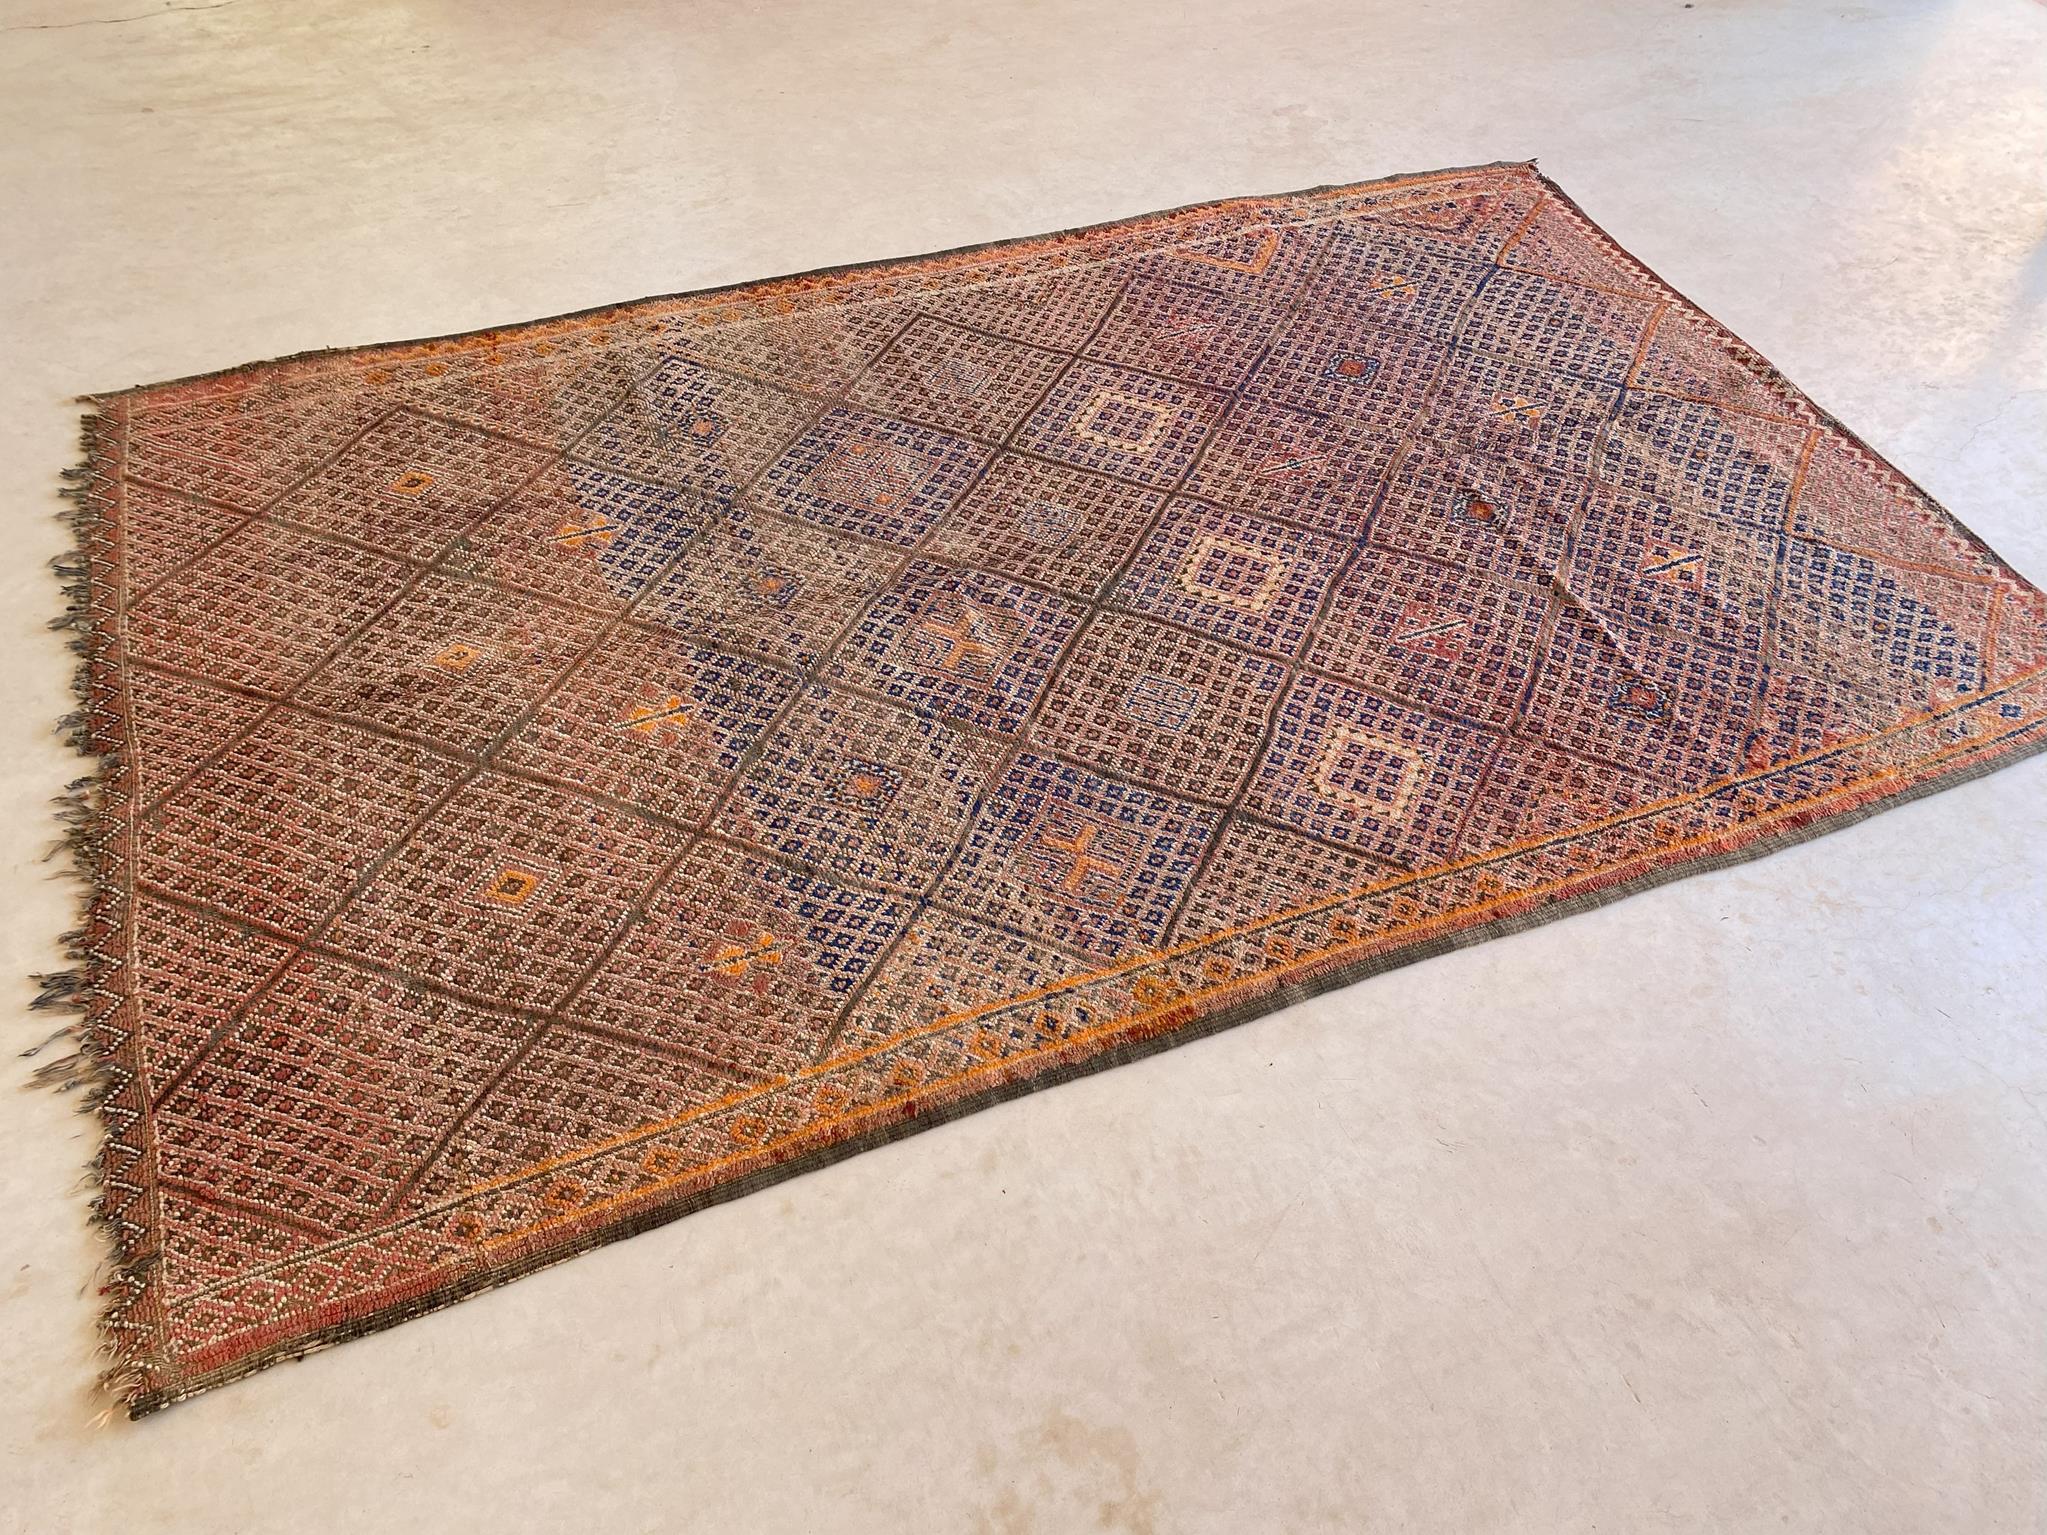 Moroccan Vintage Beni Mguild rug - Orange/terracotta/blue - 6.1x9.8feet / 186x298cm For Sale